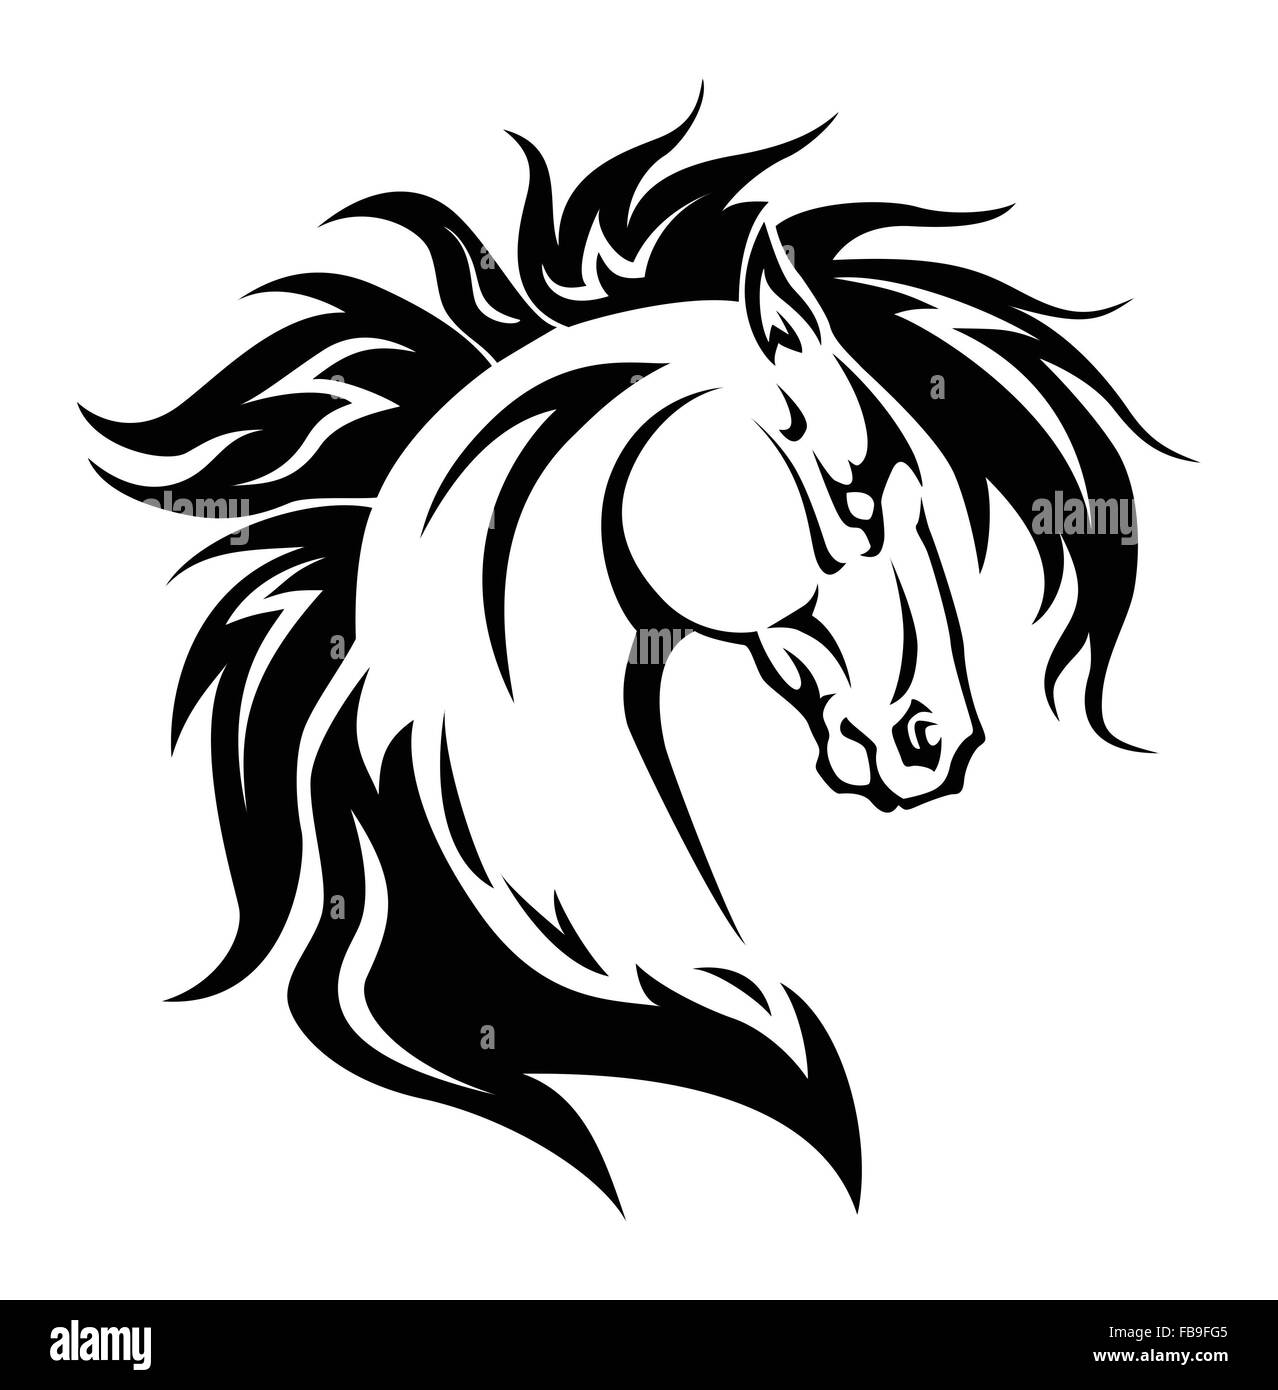 27813 Horse Tattoo Designs Images Stock Photos  Vectors  Shutterstock